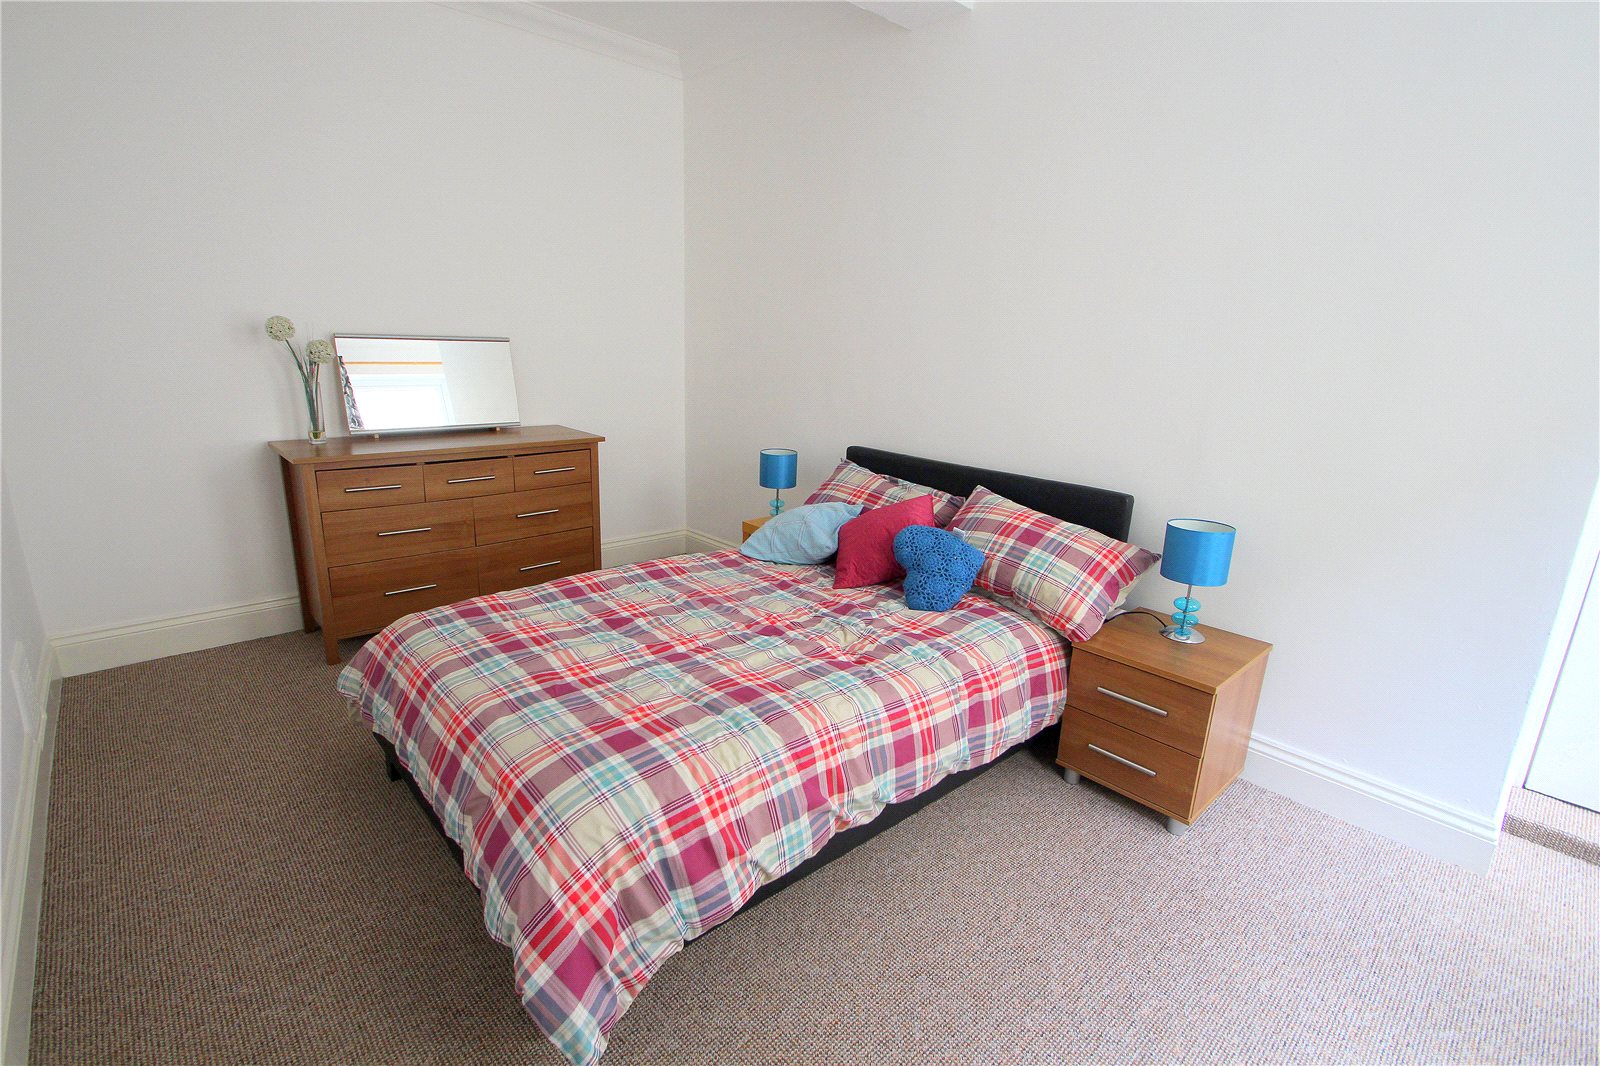 Cj Hole Southville 1 Bedroom Flat For Sale In West Street Bedminster 